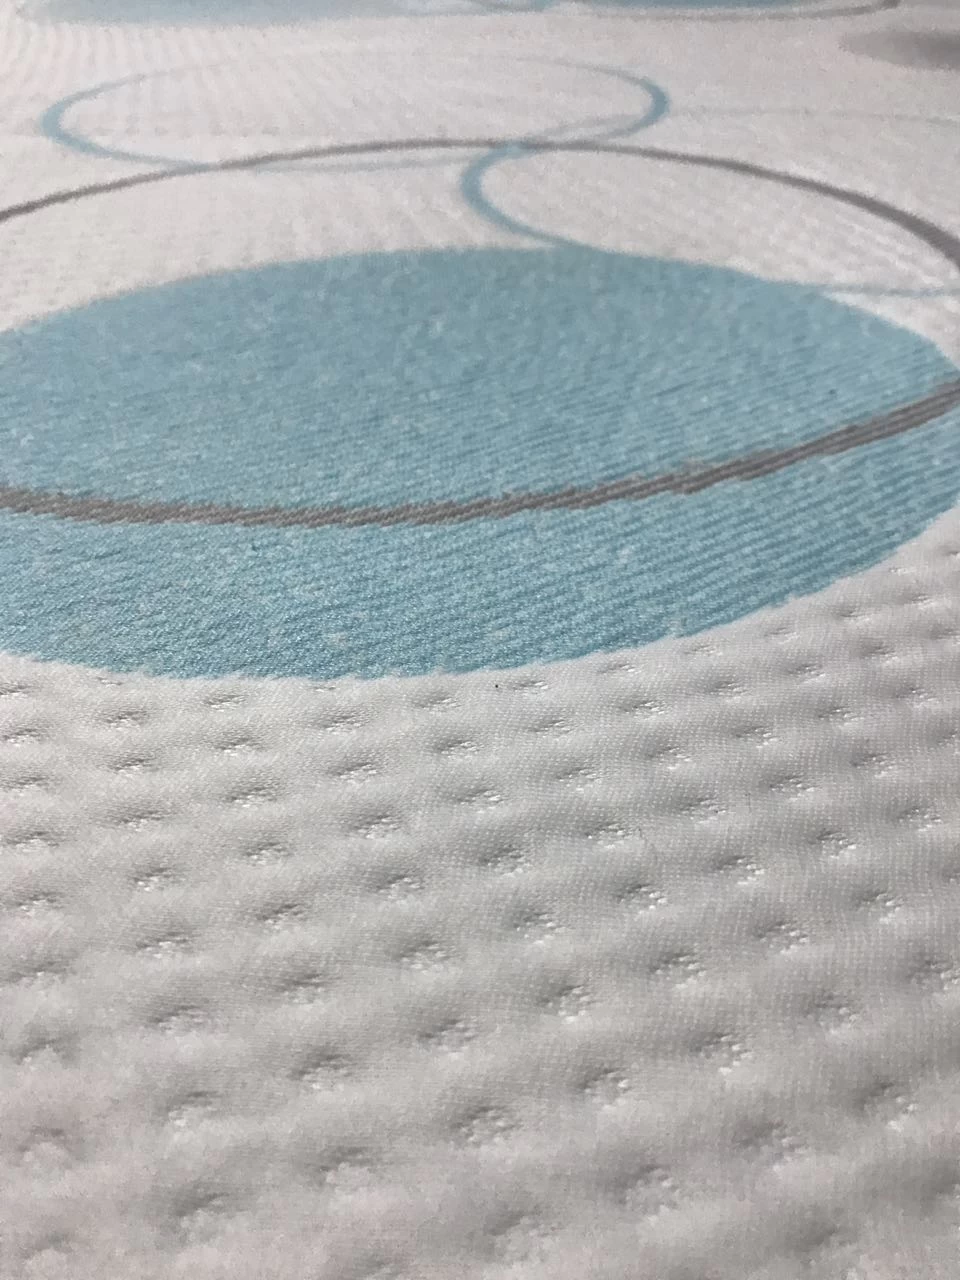 mattress fabric and mattress components